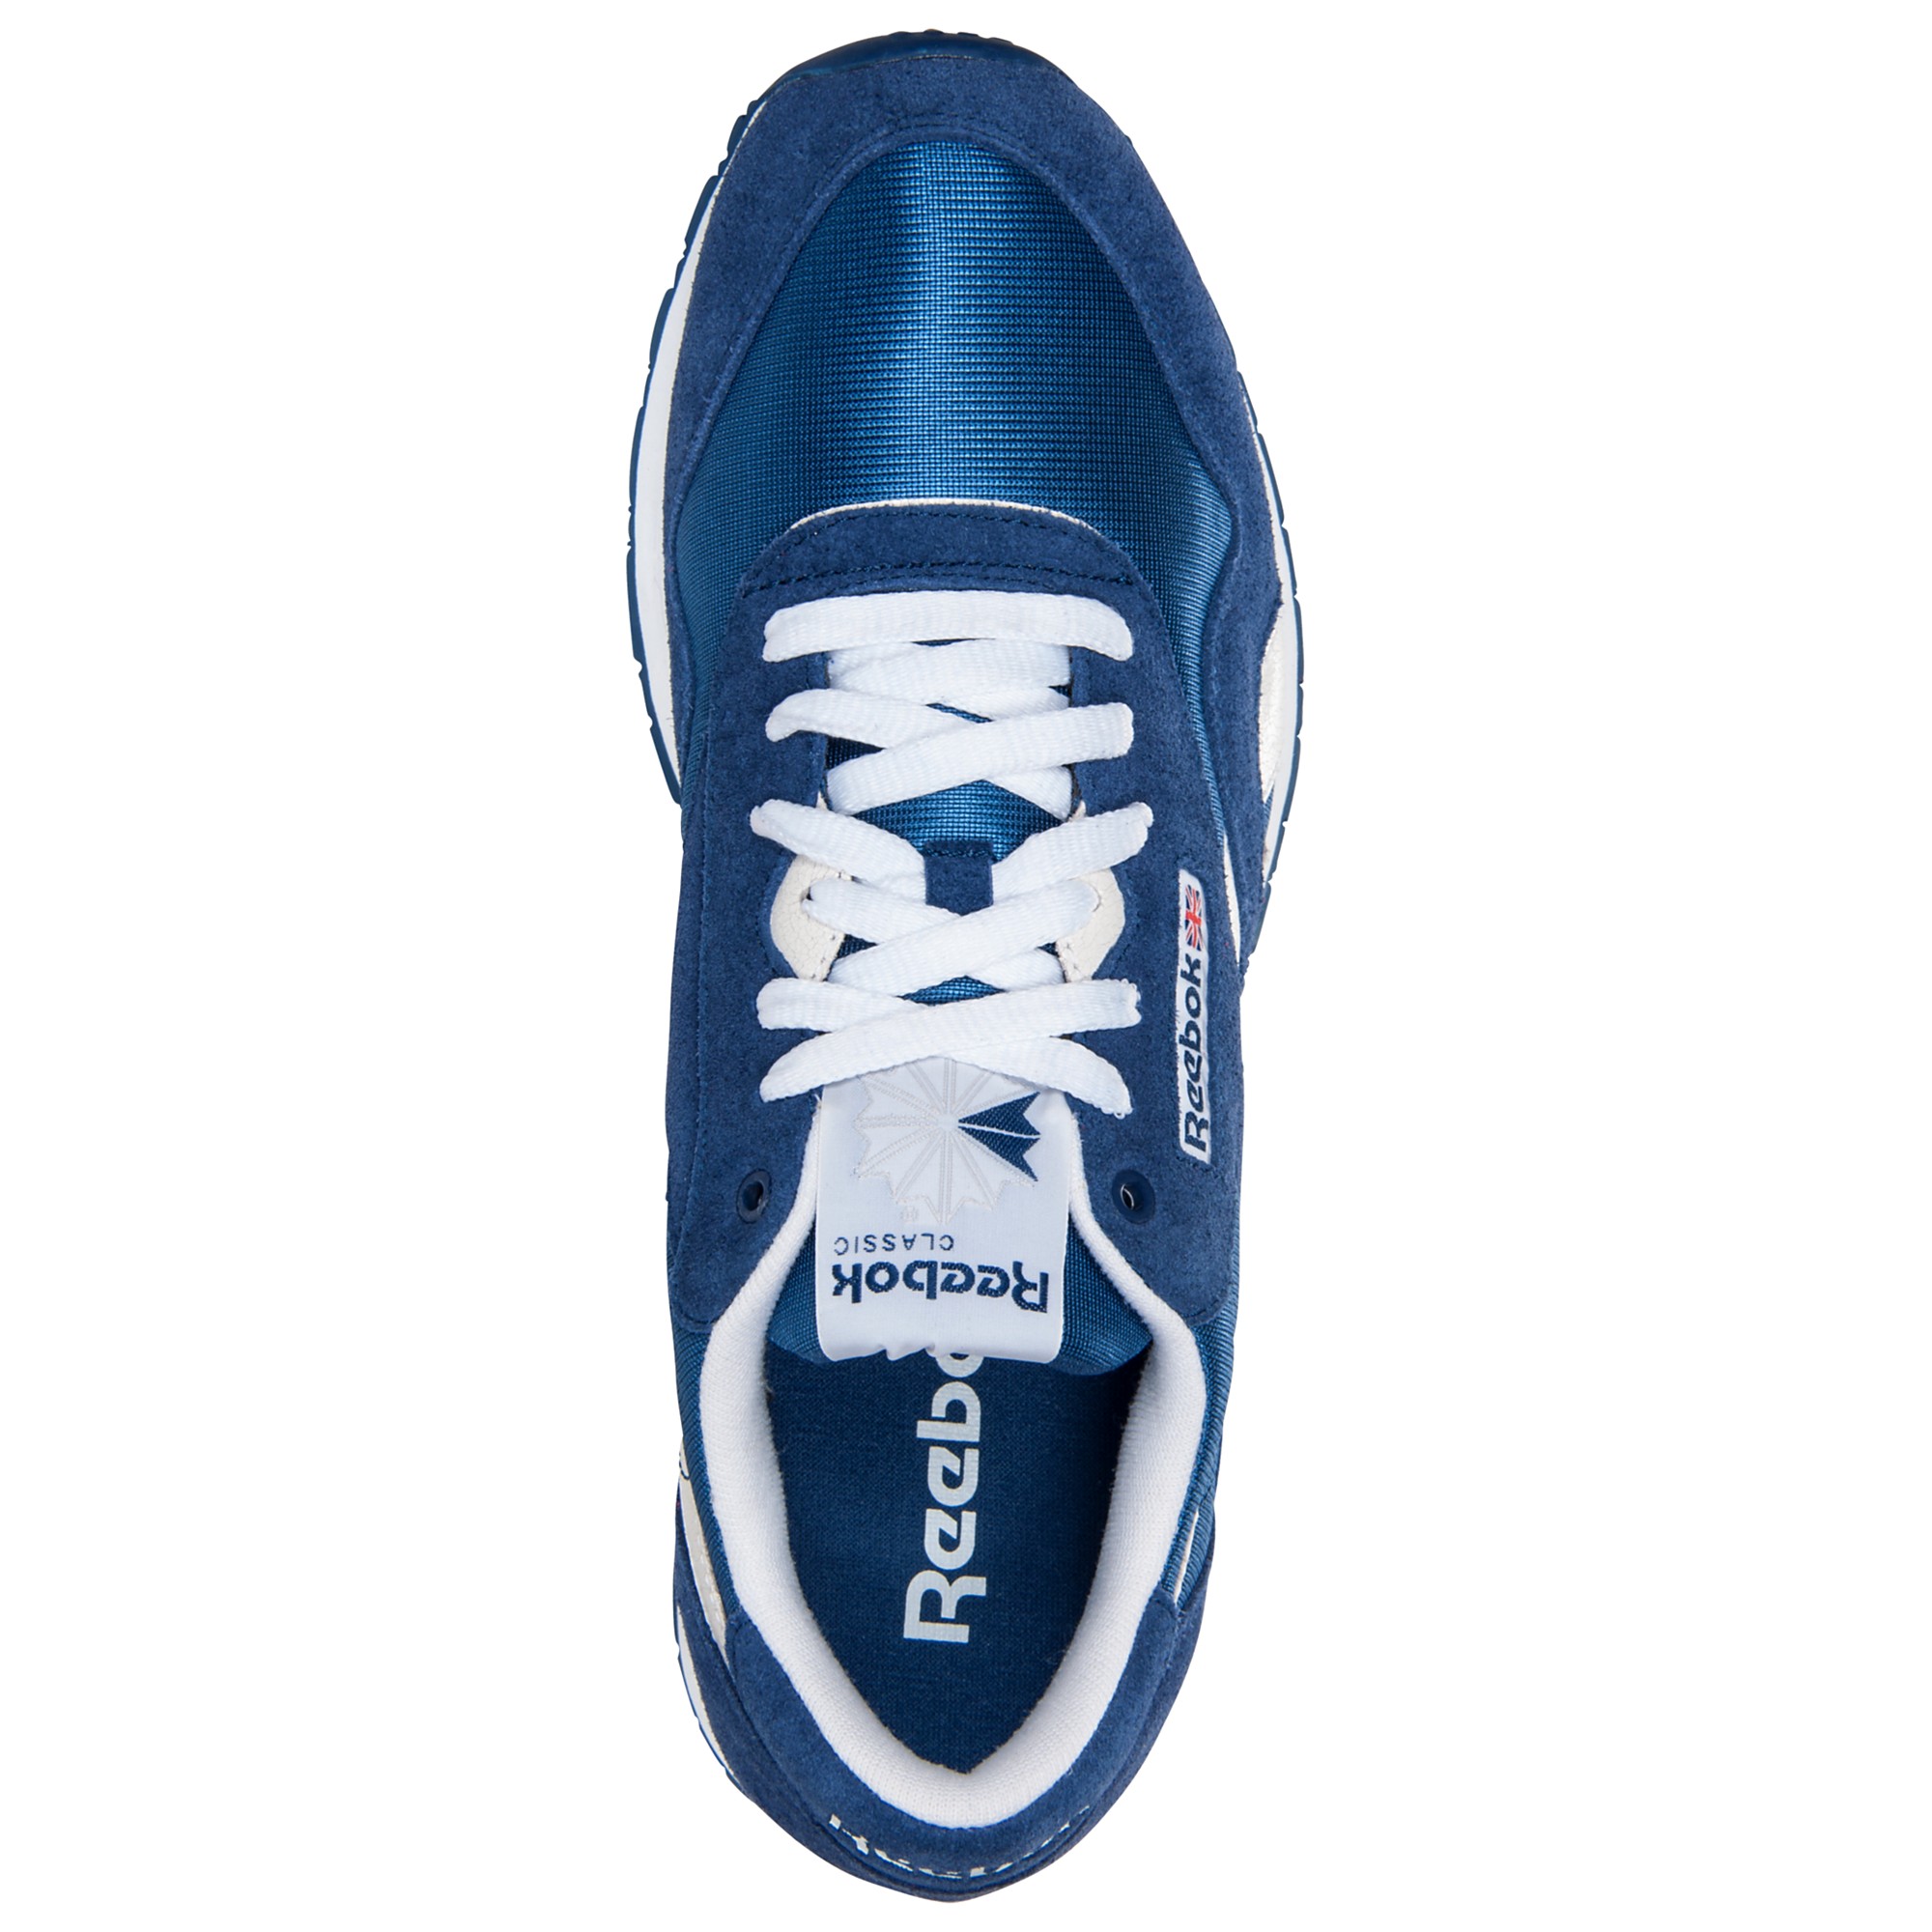 Reebok Classic Nylon Casual Sneakers in Blue for Men - Lyst